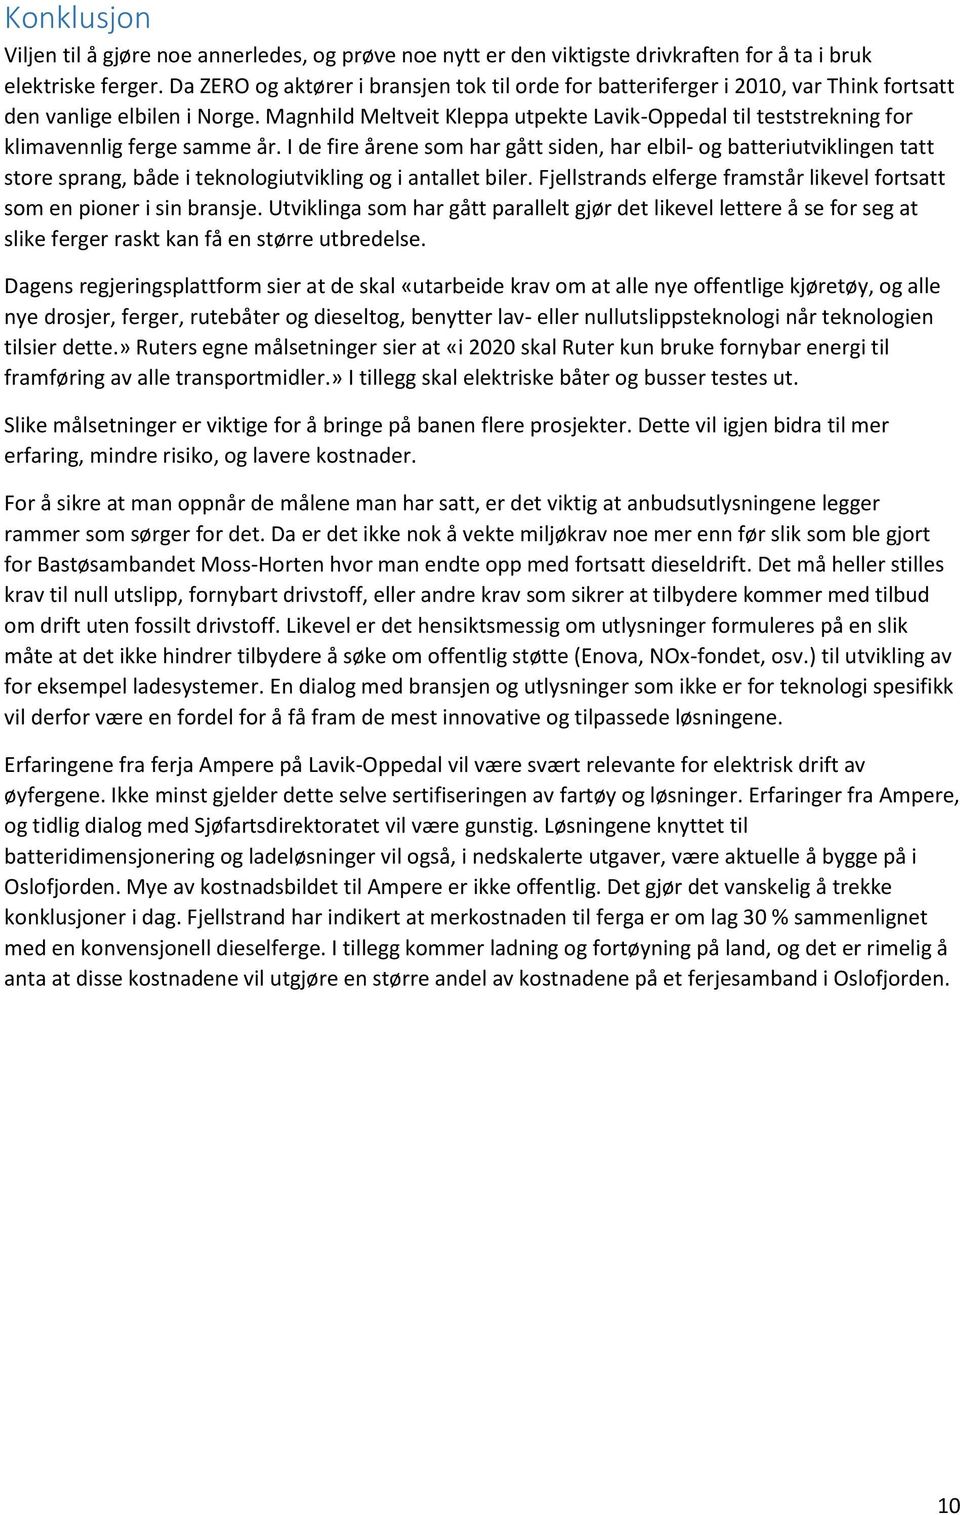 Magnhild Meltveit Kleppa utpekte Lavik-Oppedal til teststrekning for klimavennlig ferge samme år.